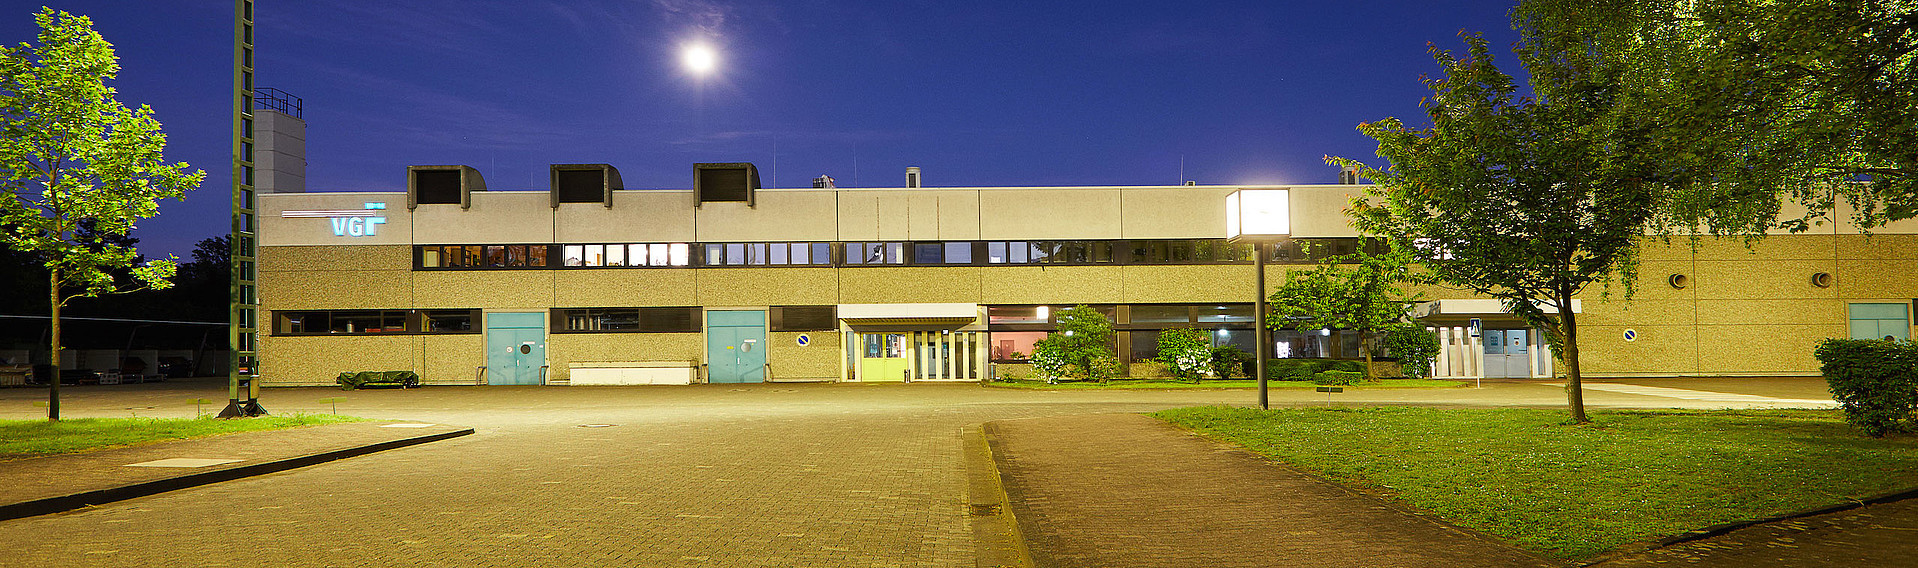 VGF-Bürogebäude bei Nacht